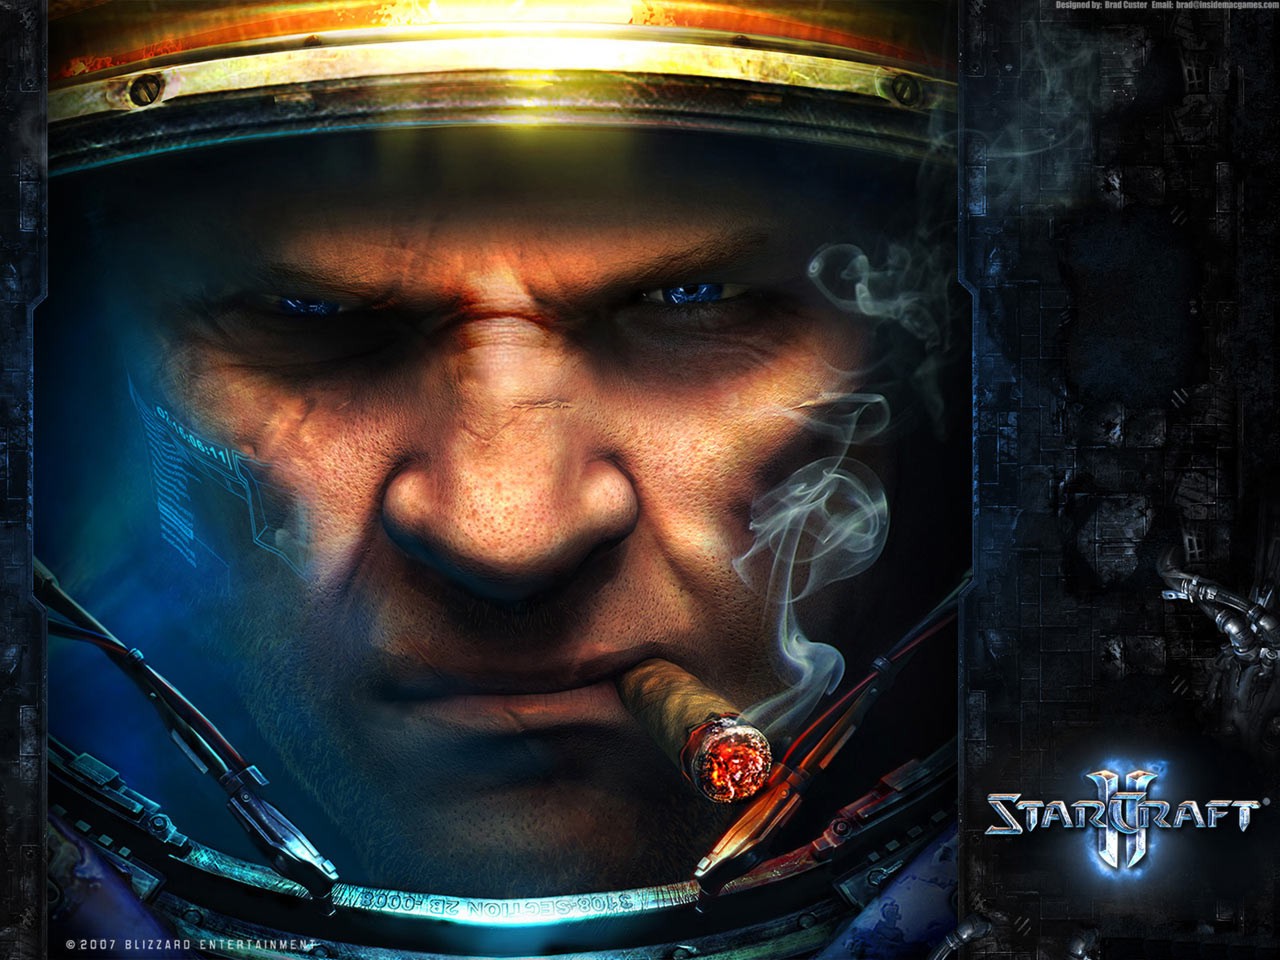 Download High quality StarCraft 2 wallpaper / Games / 1280x960